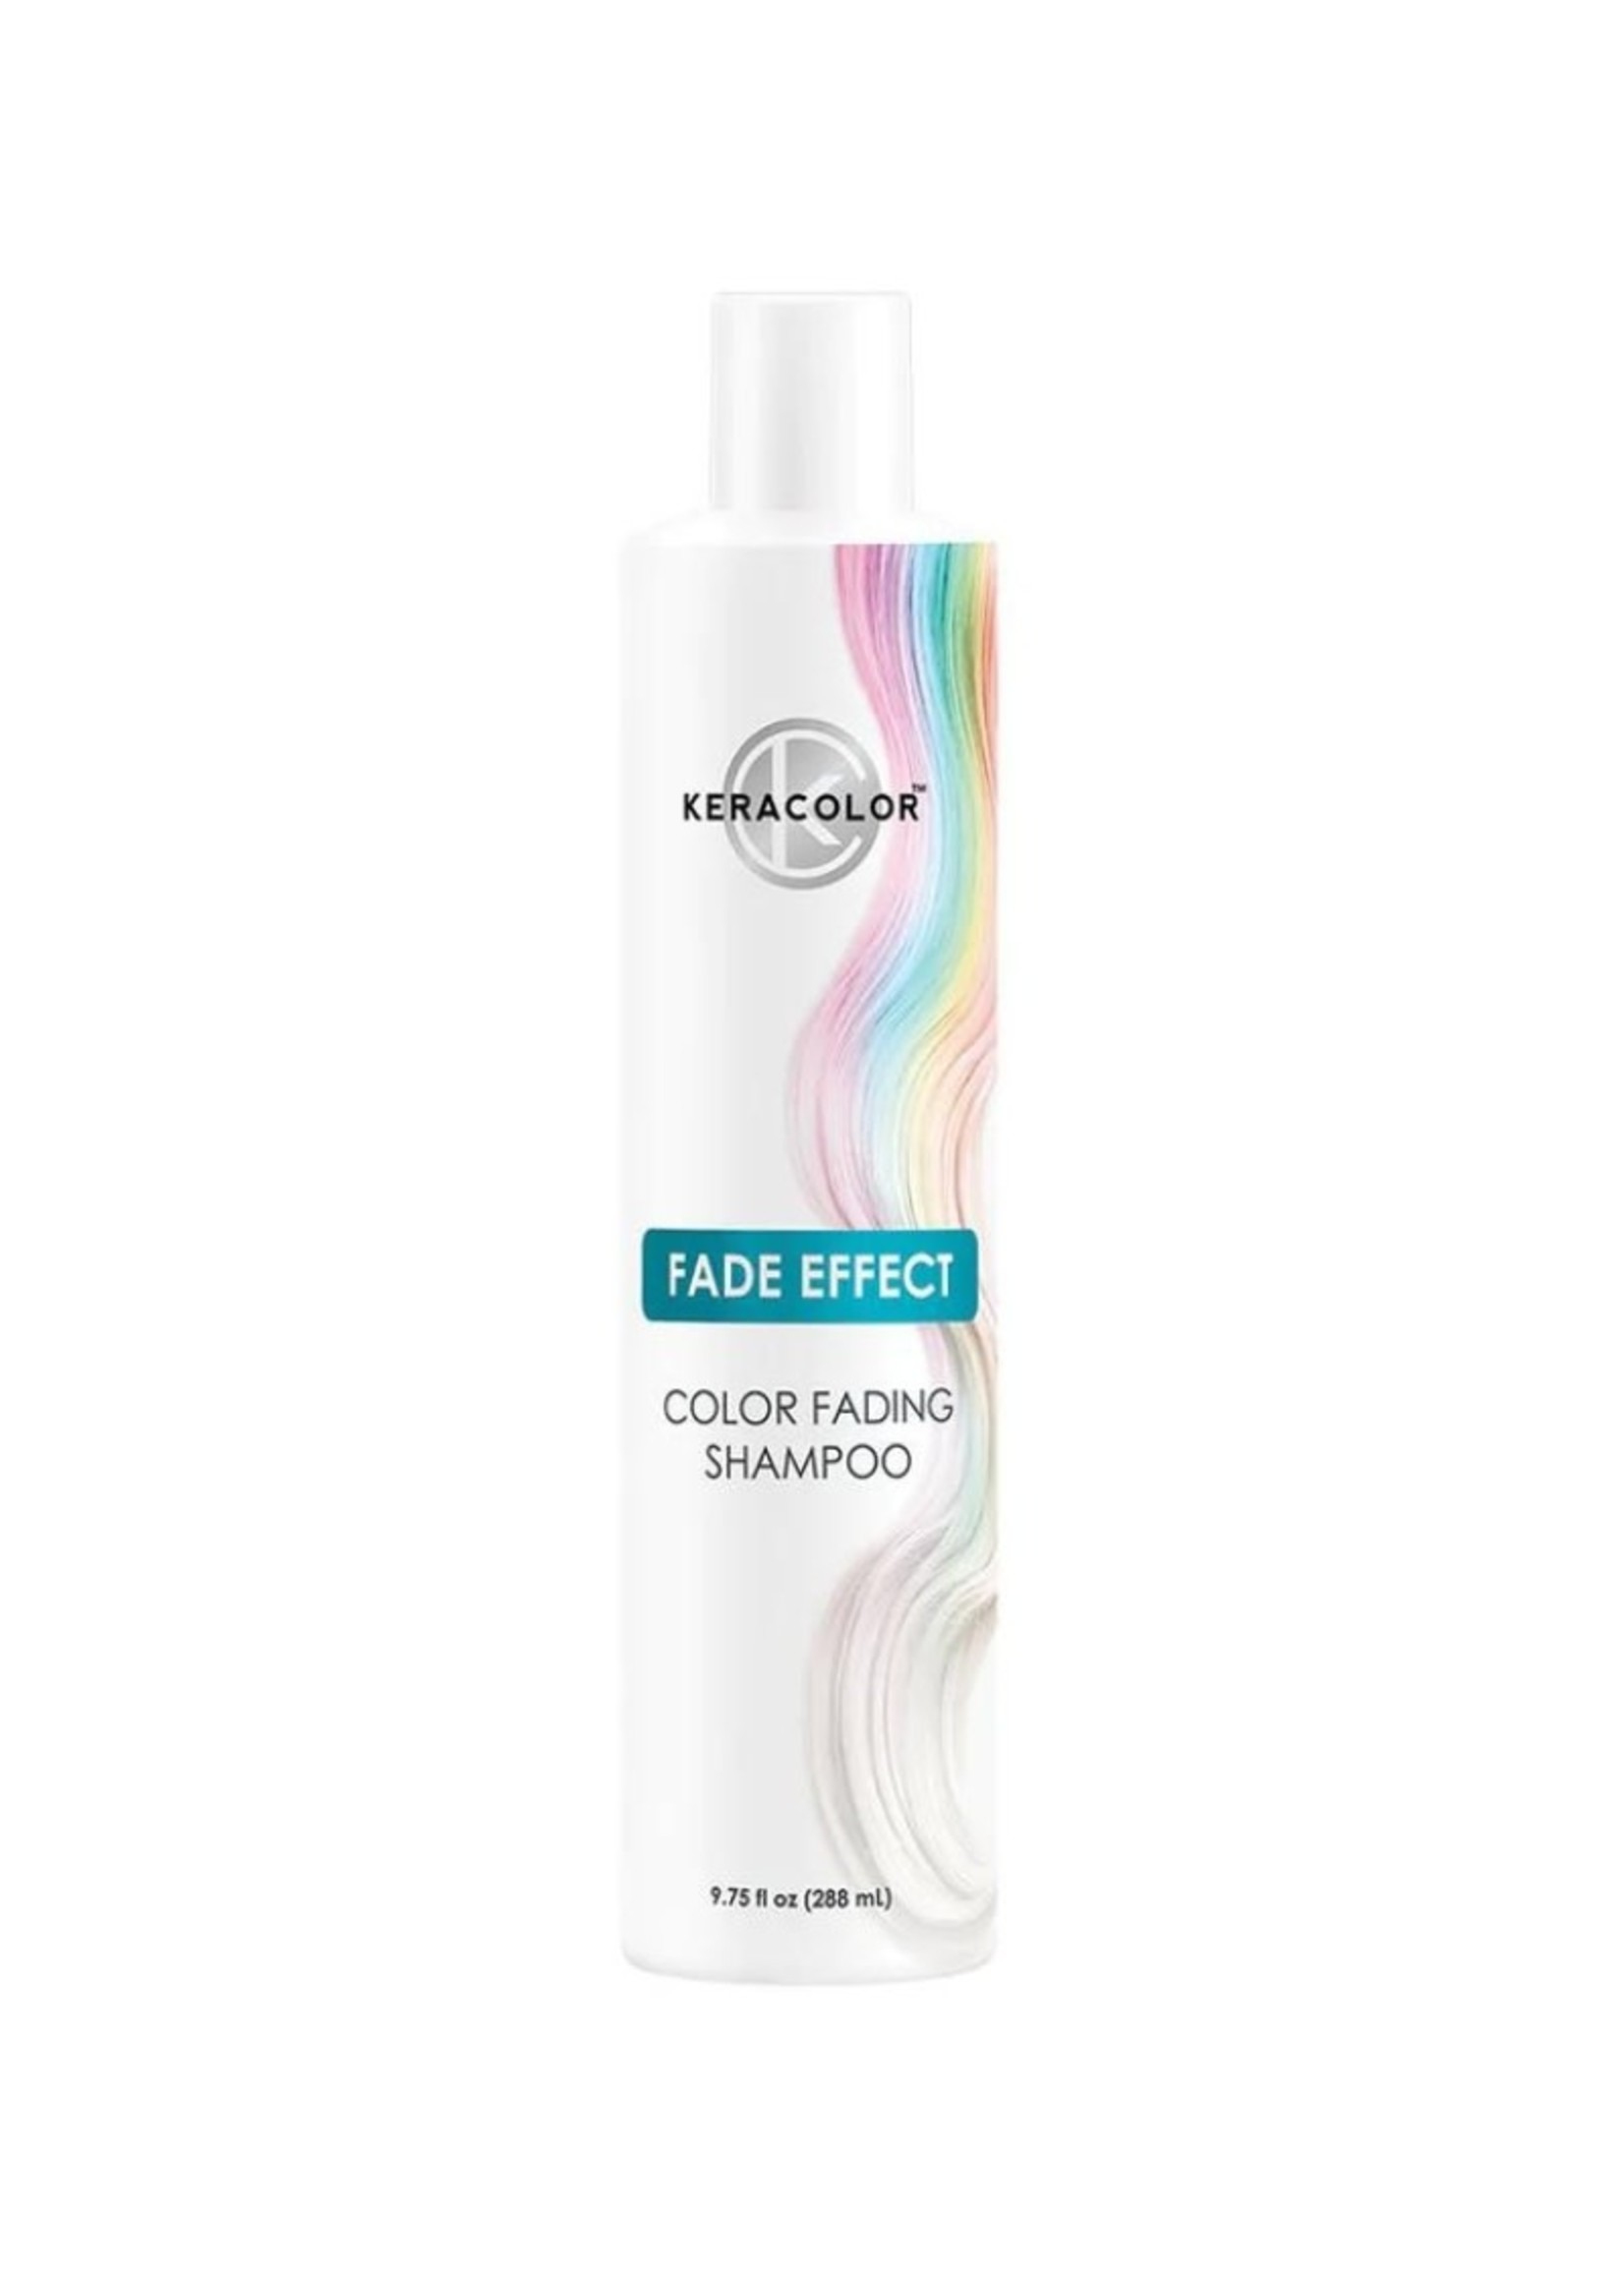 Keracolor Keracolor Fade Effect Color Fading Shampoo 288ml